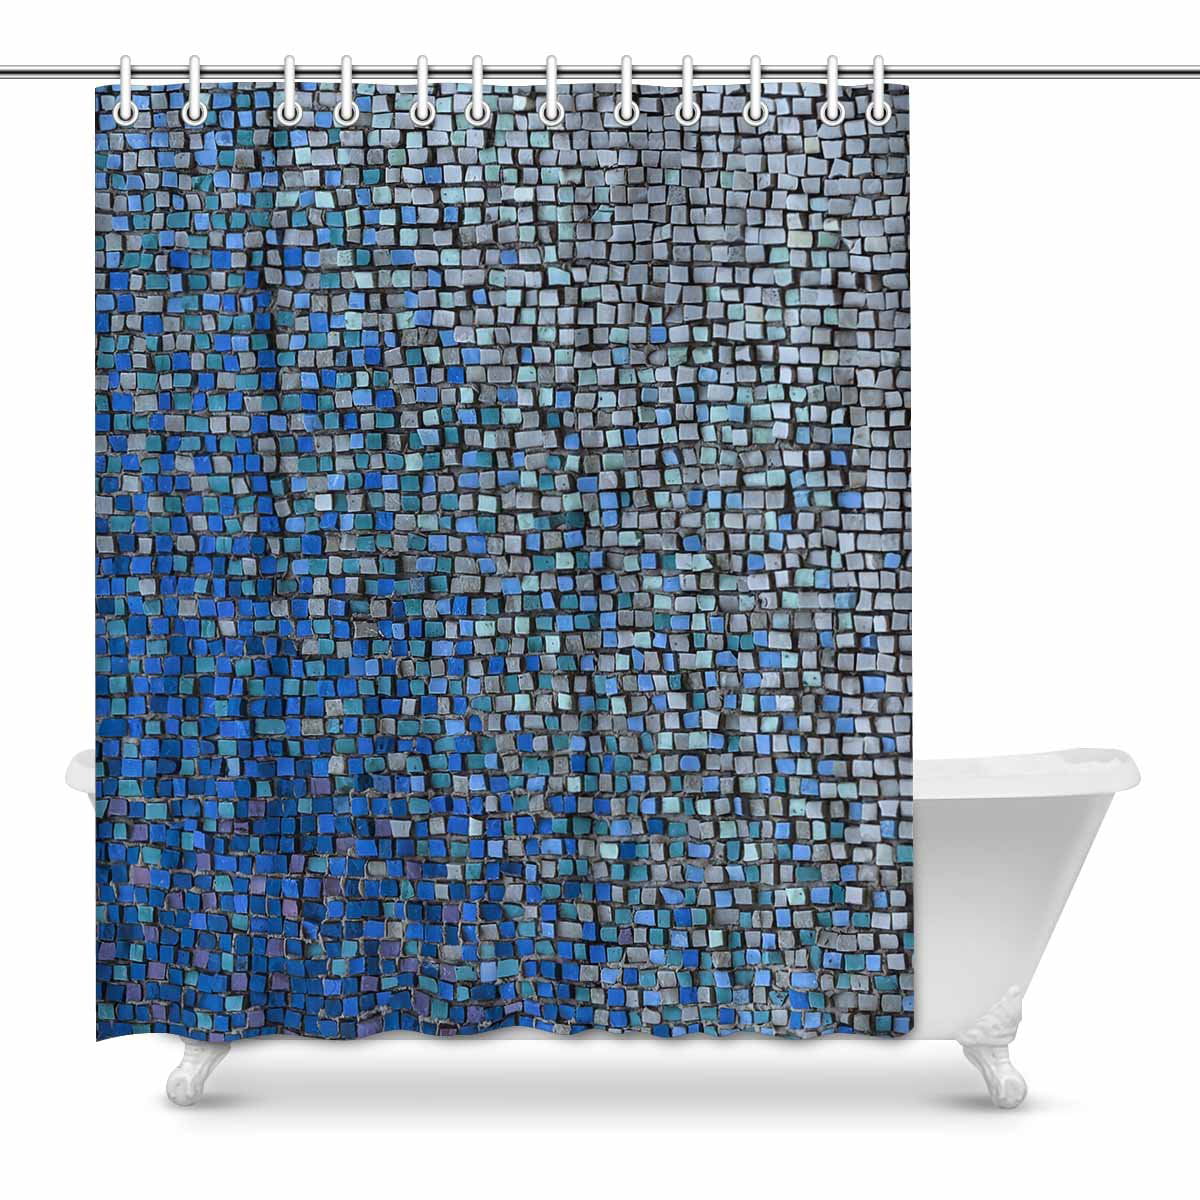 72 X 72 Inches Saadiya Blue Marble Shower Curtain for Bathroom Waterproof Fabric Decorative Shower Curtain Set with 12 Hooks 